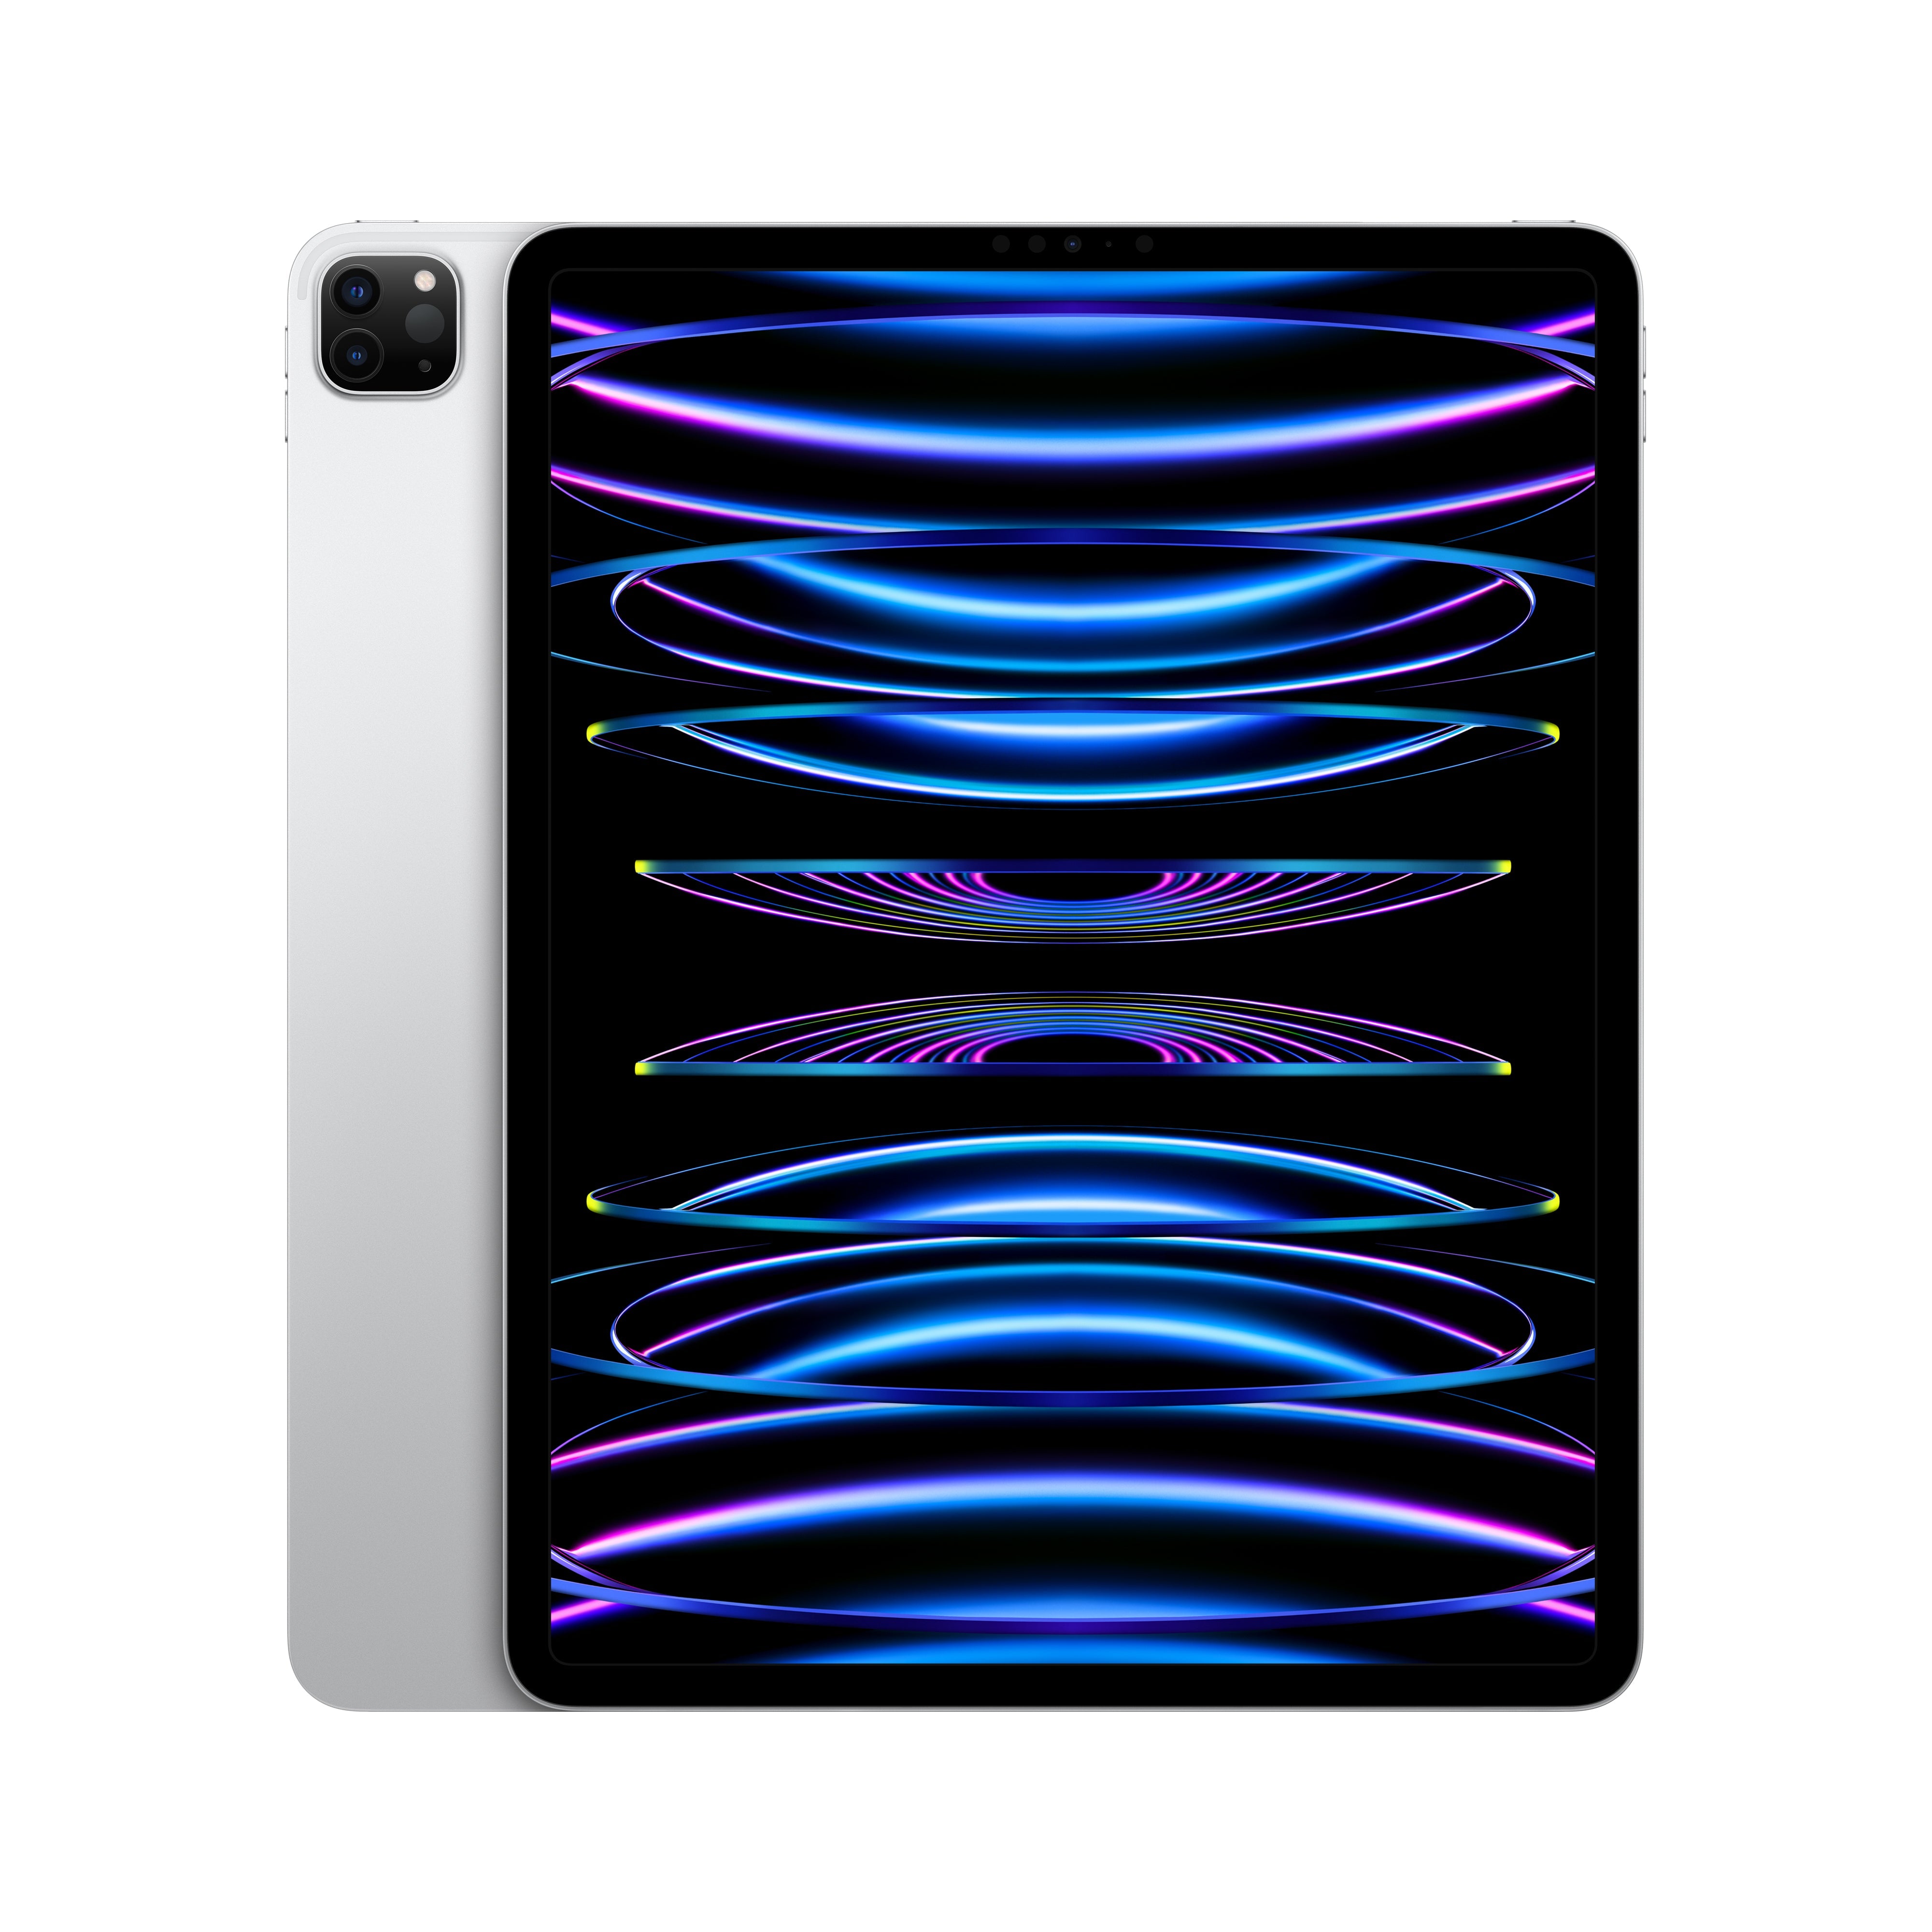 iPad Pro 11in (4th Gen) Wi-Fi 256GB - Silver